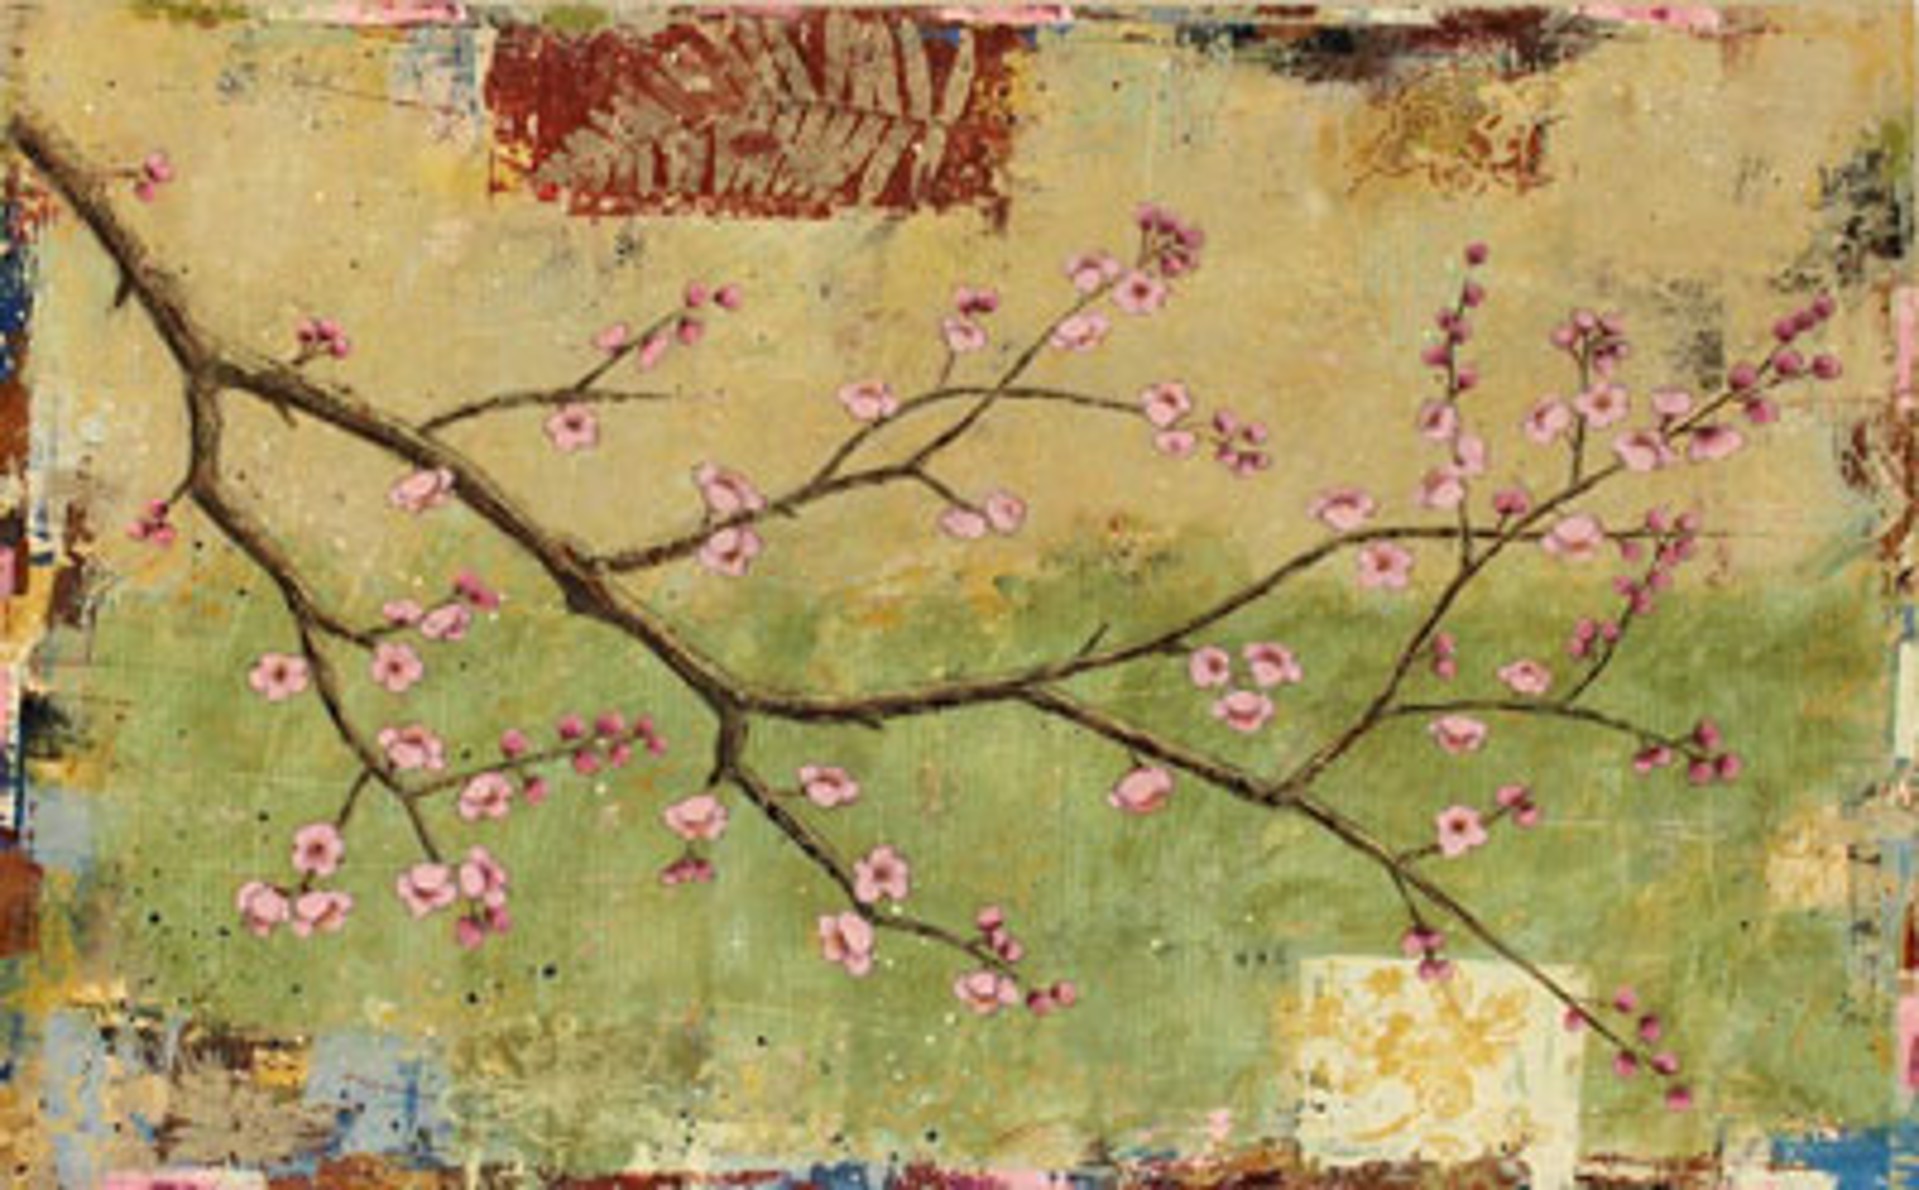 Flowering Cherry #2 by Paul Brigham